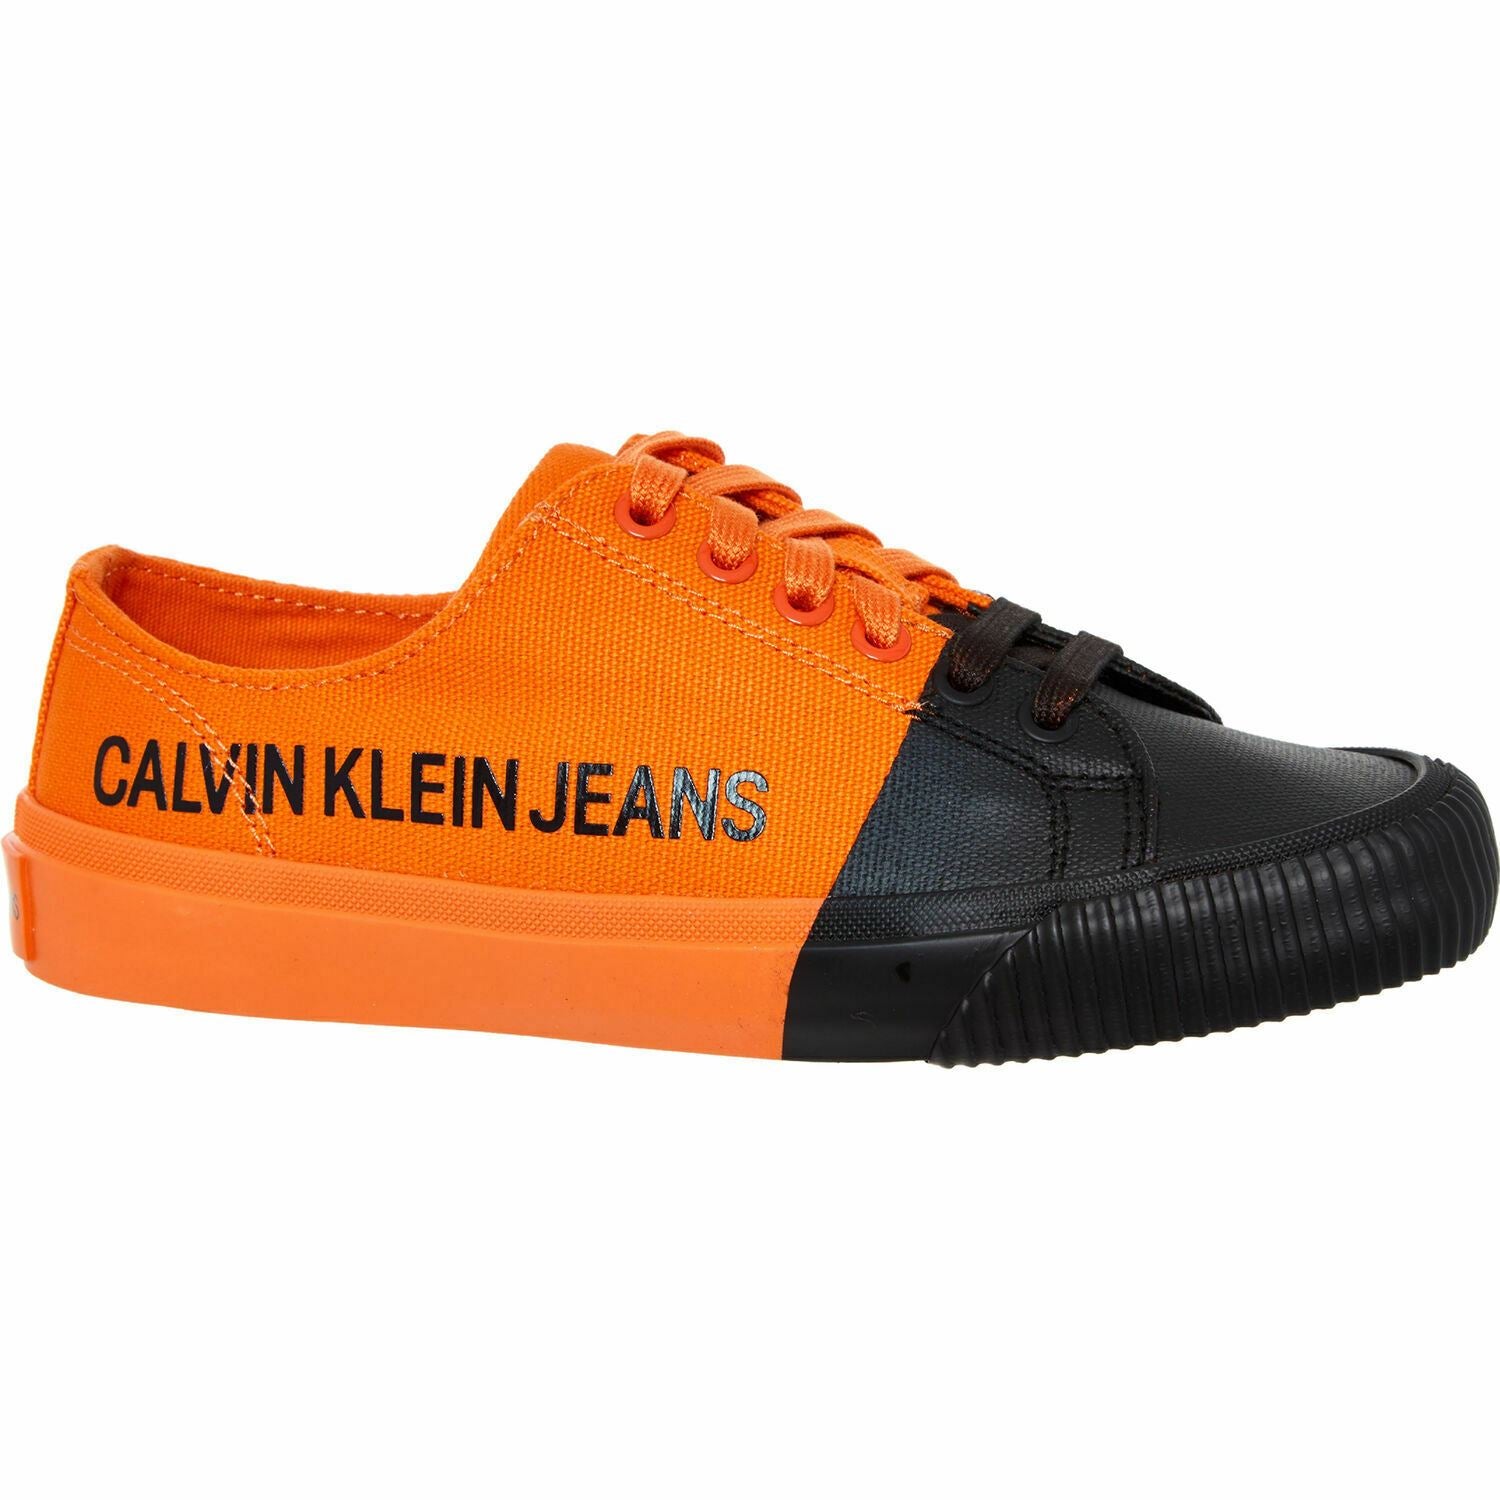 Calvin Klein Jeans Women's IVANIA Orange & Black Canvas Trainers, UK 5